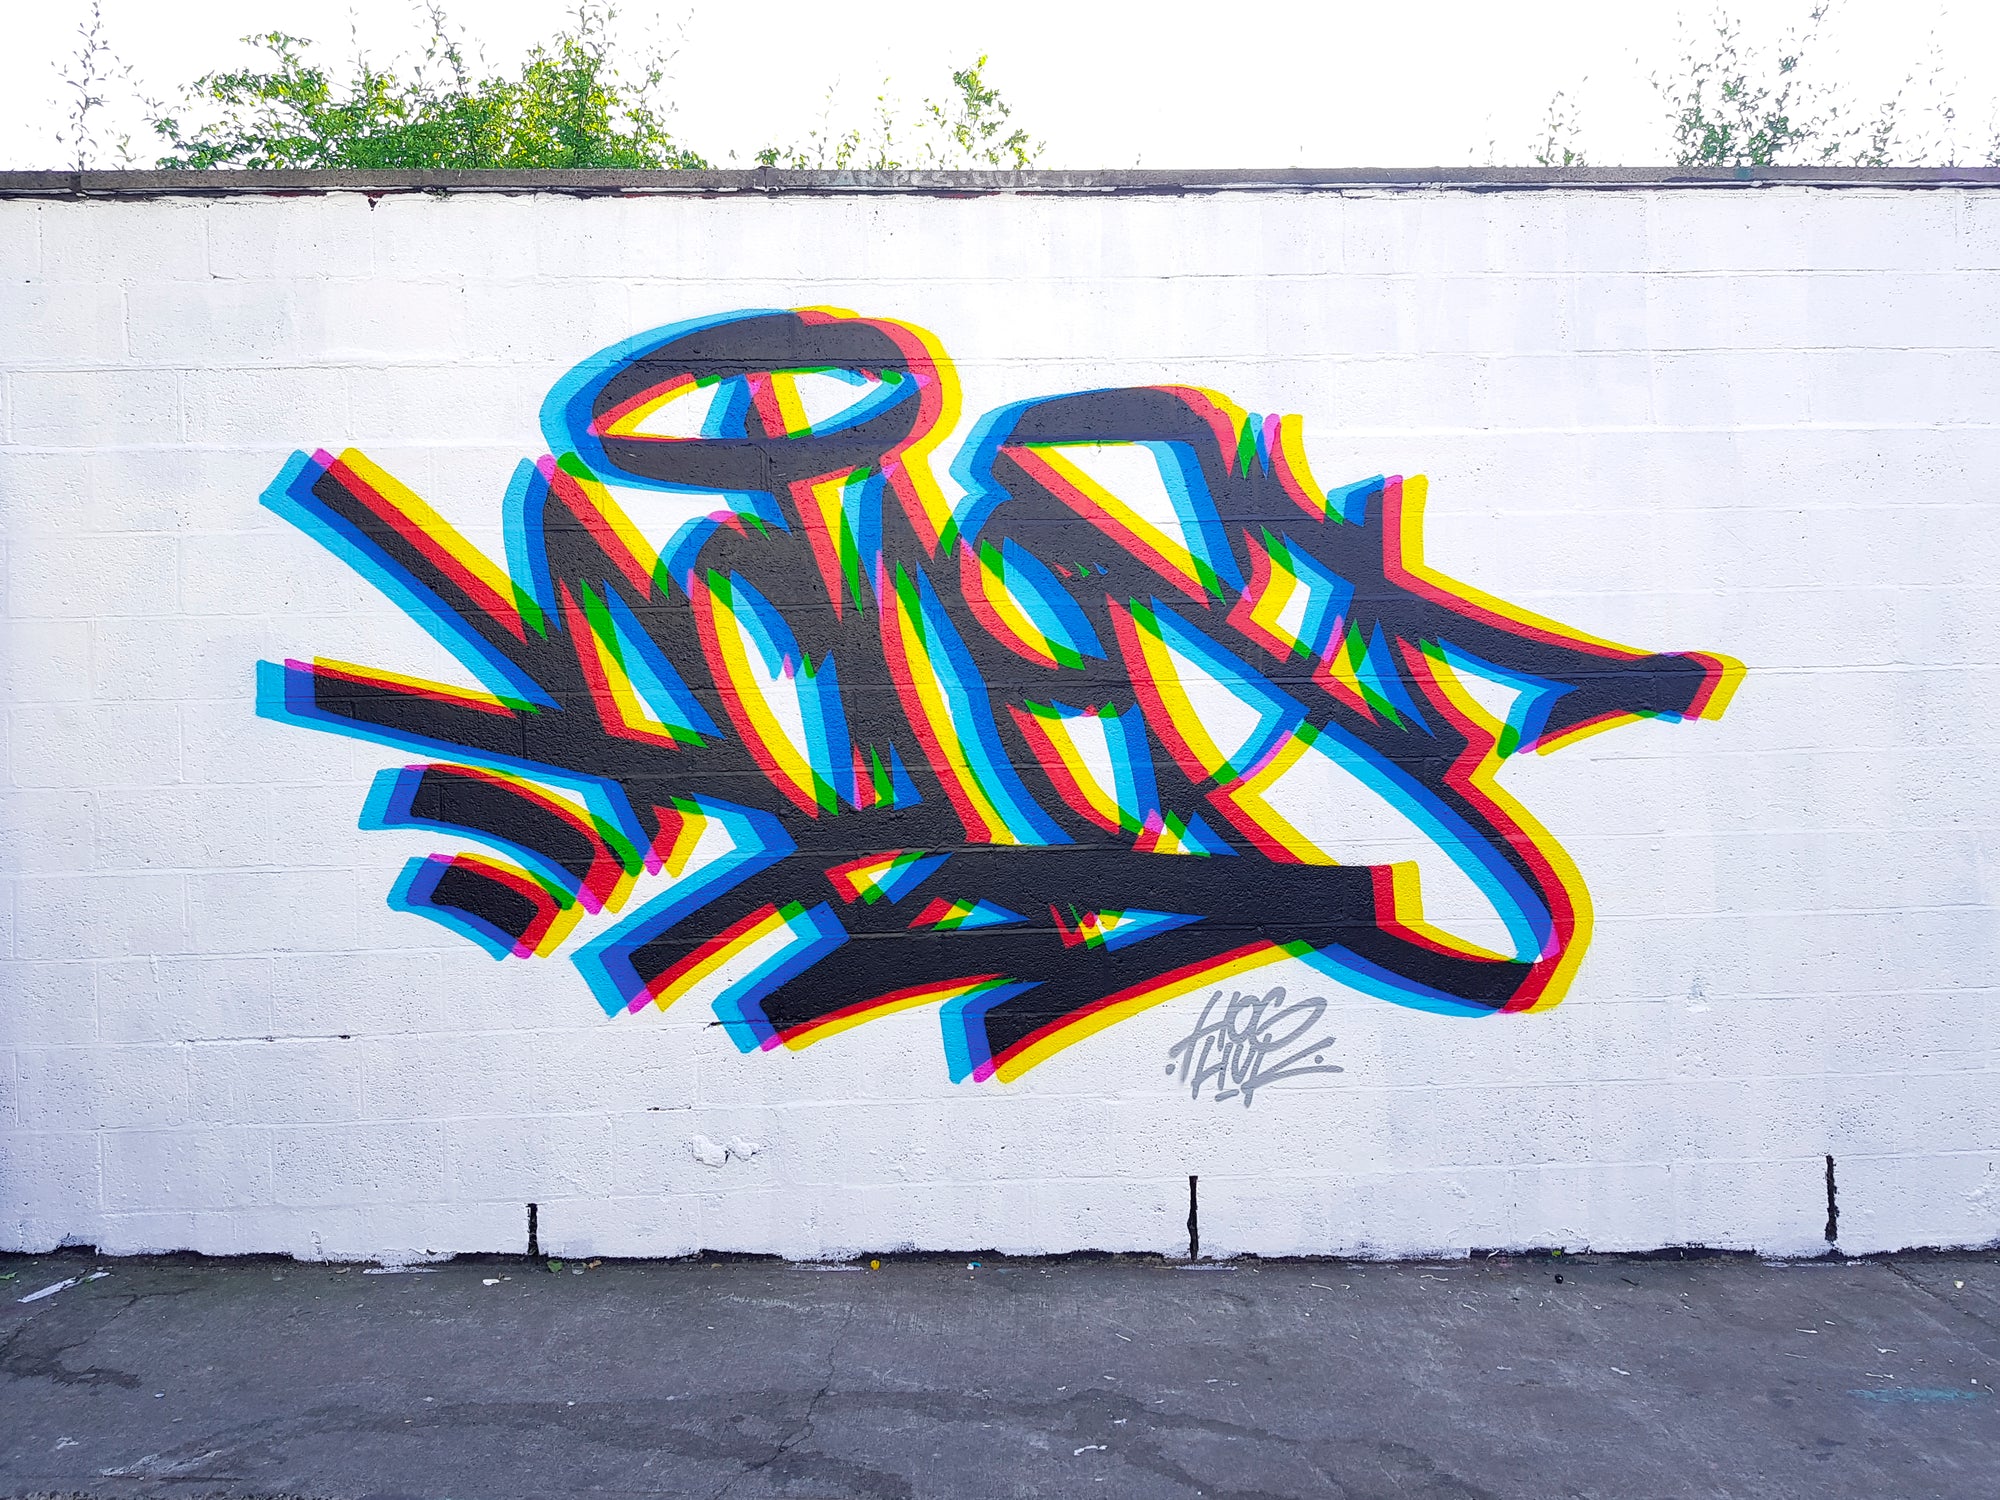 ACHES Graffiti Artist Interview